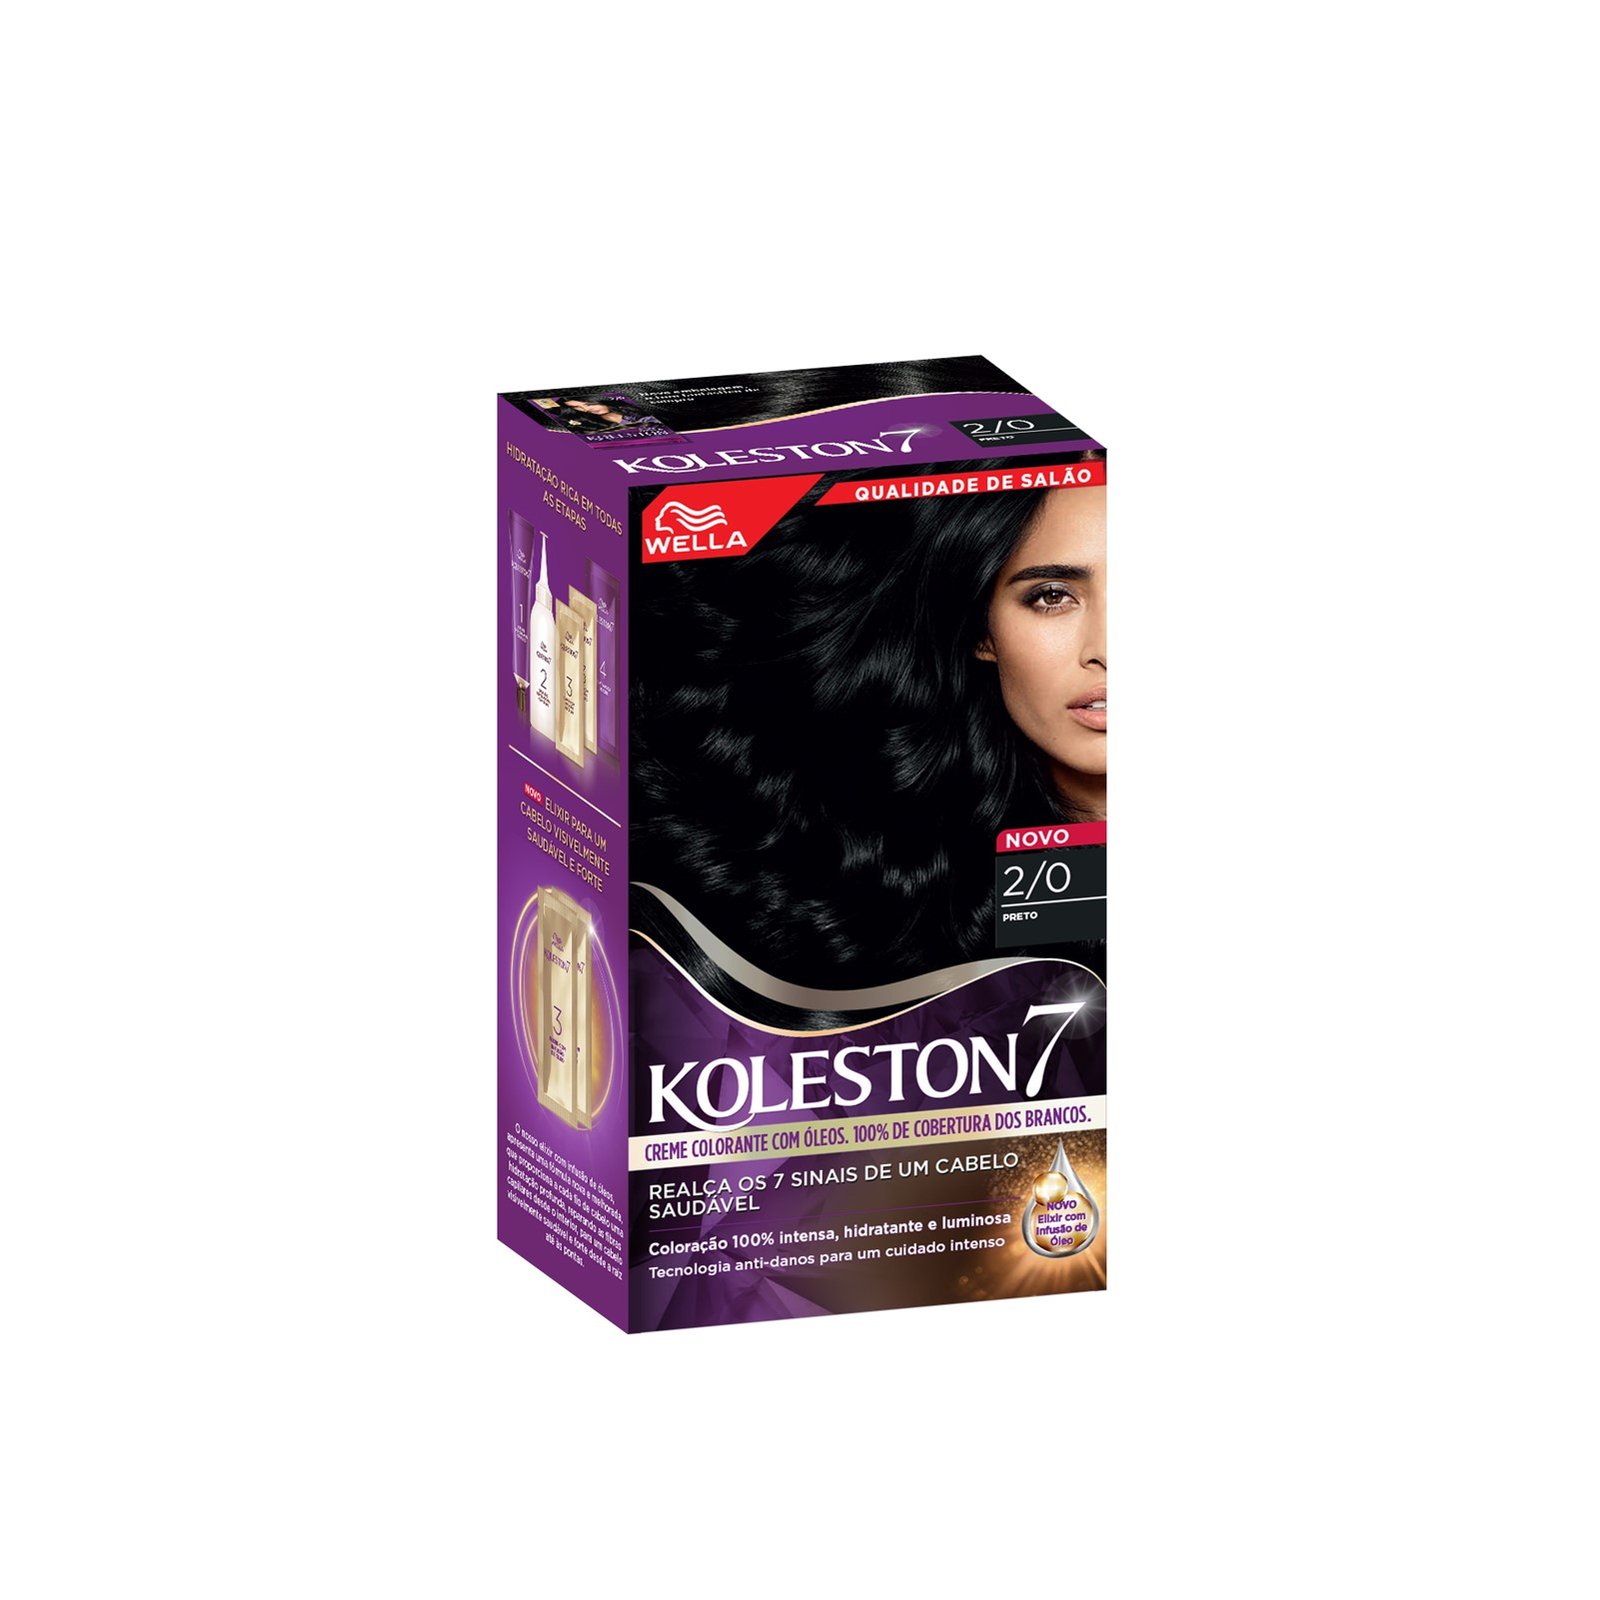 Wella Koleston 2/0 Black Permanent Hair Color